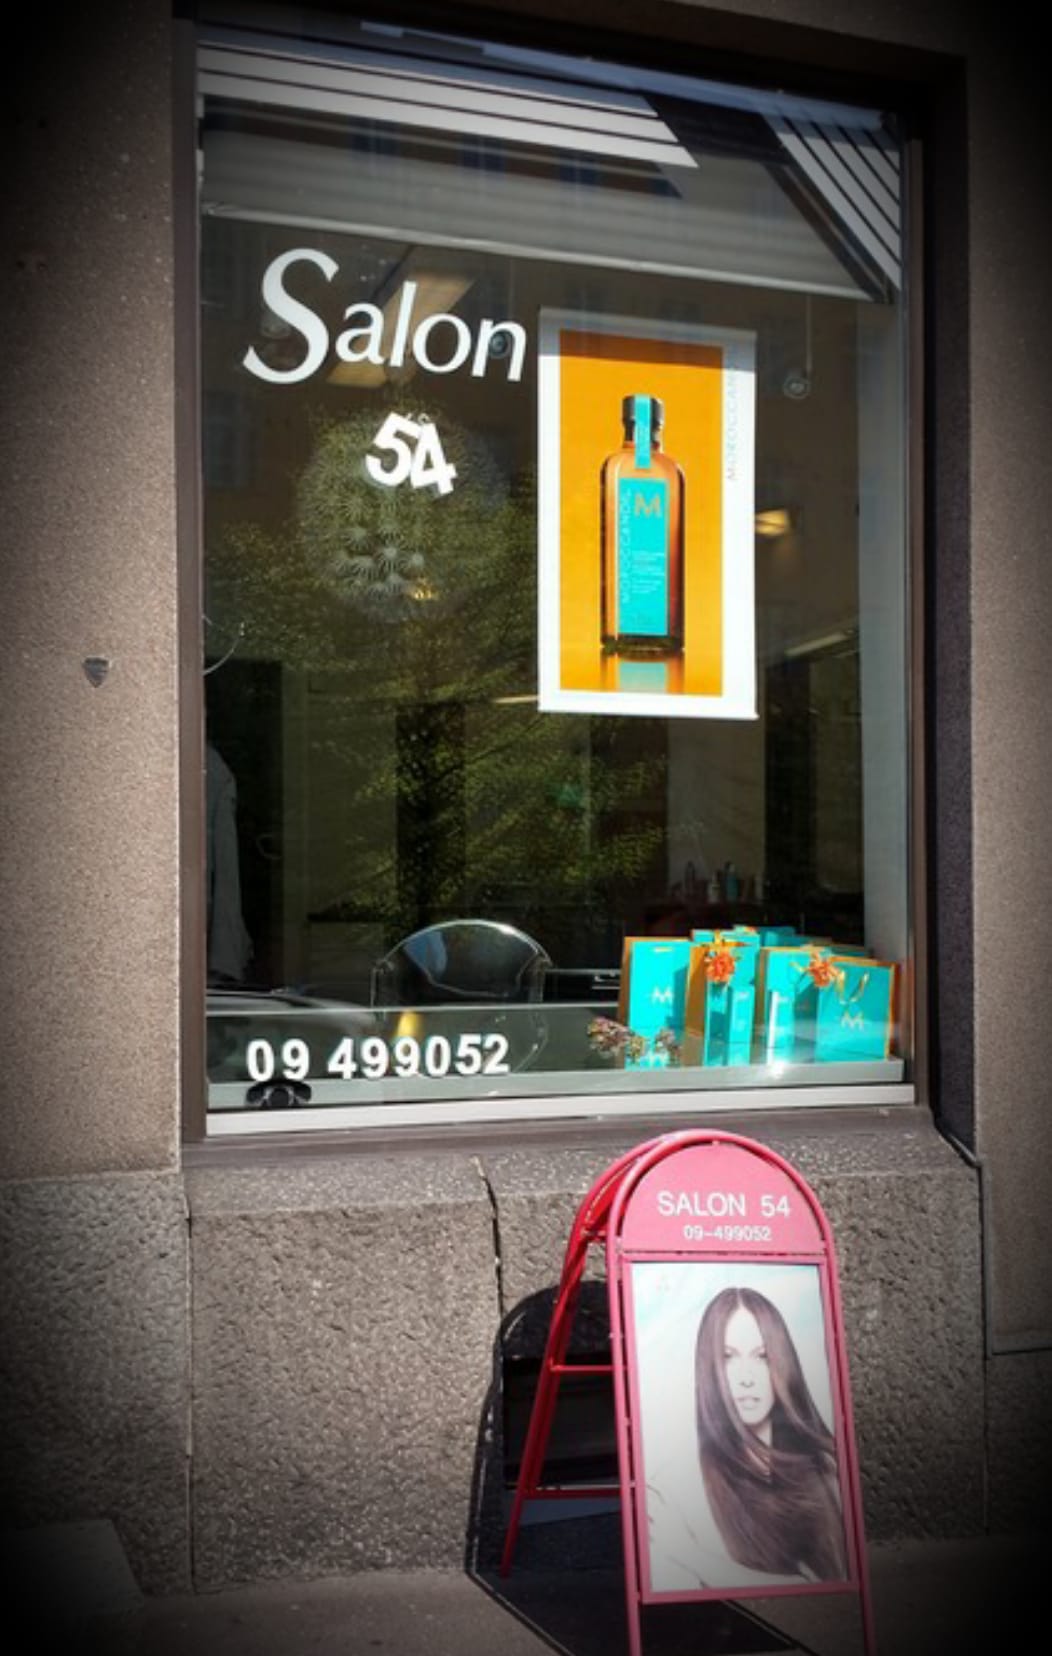 Salon54